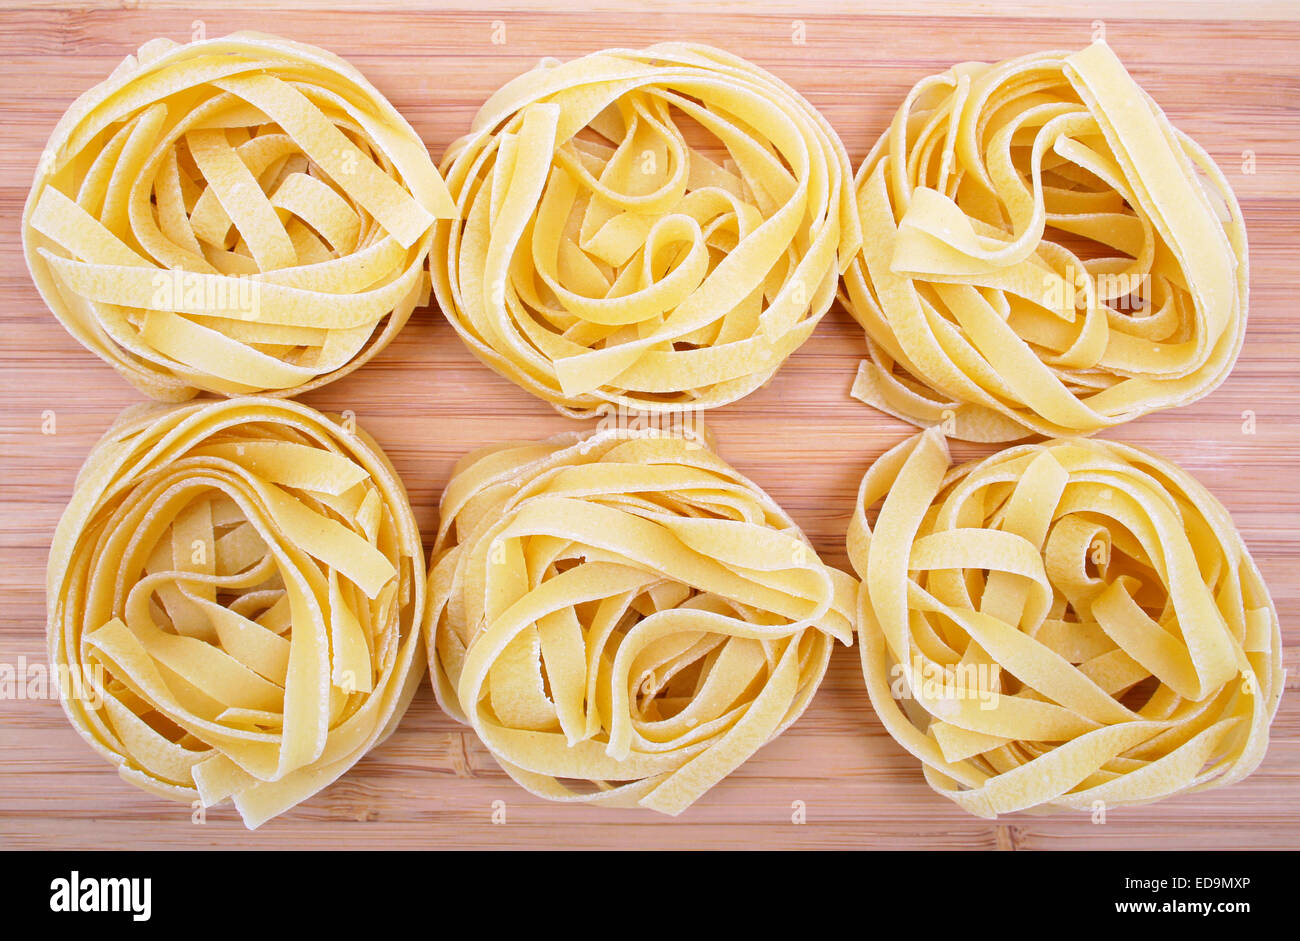 Tagliatelle pasta on the wooden background Stock Photo